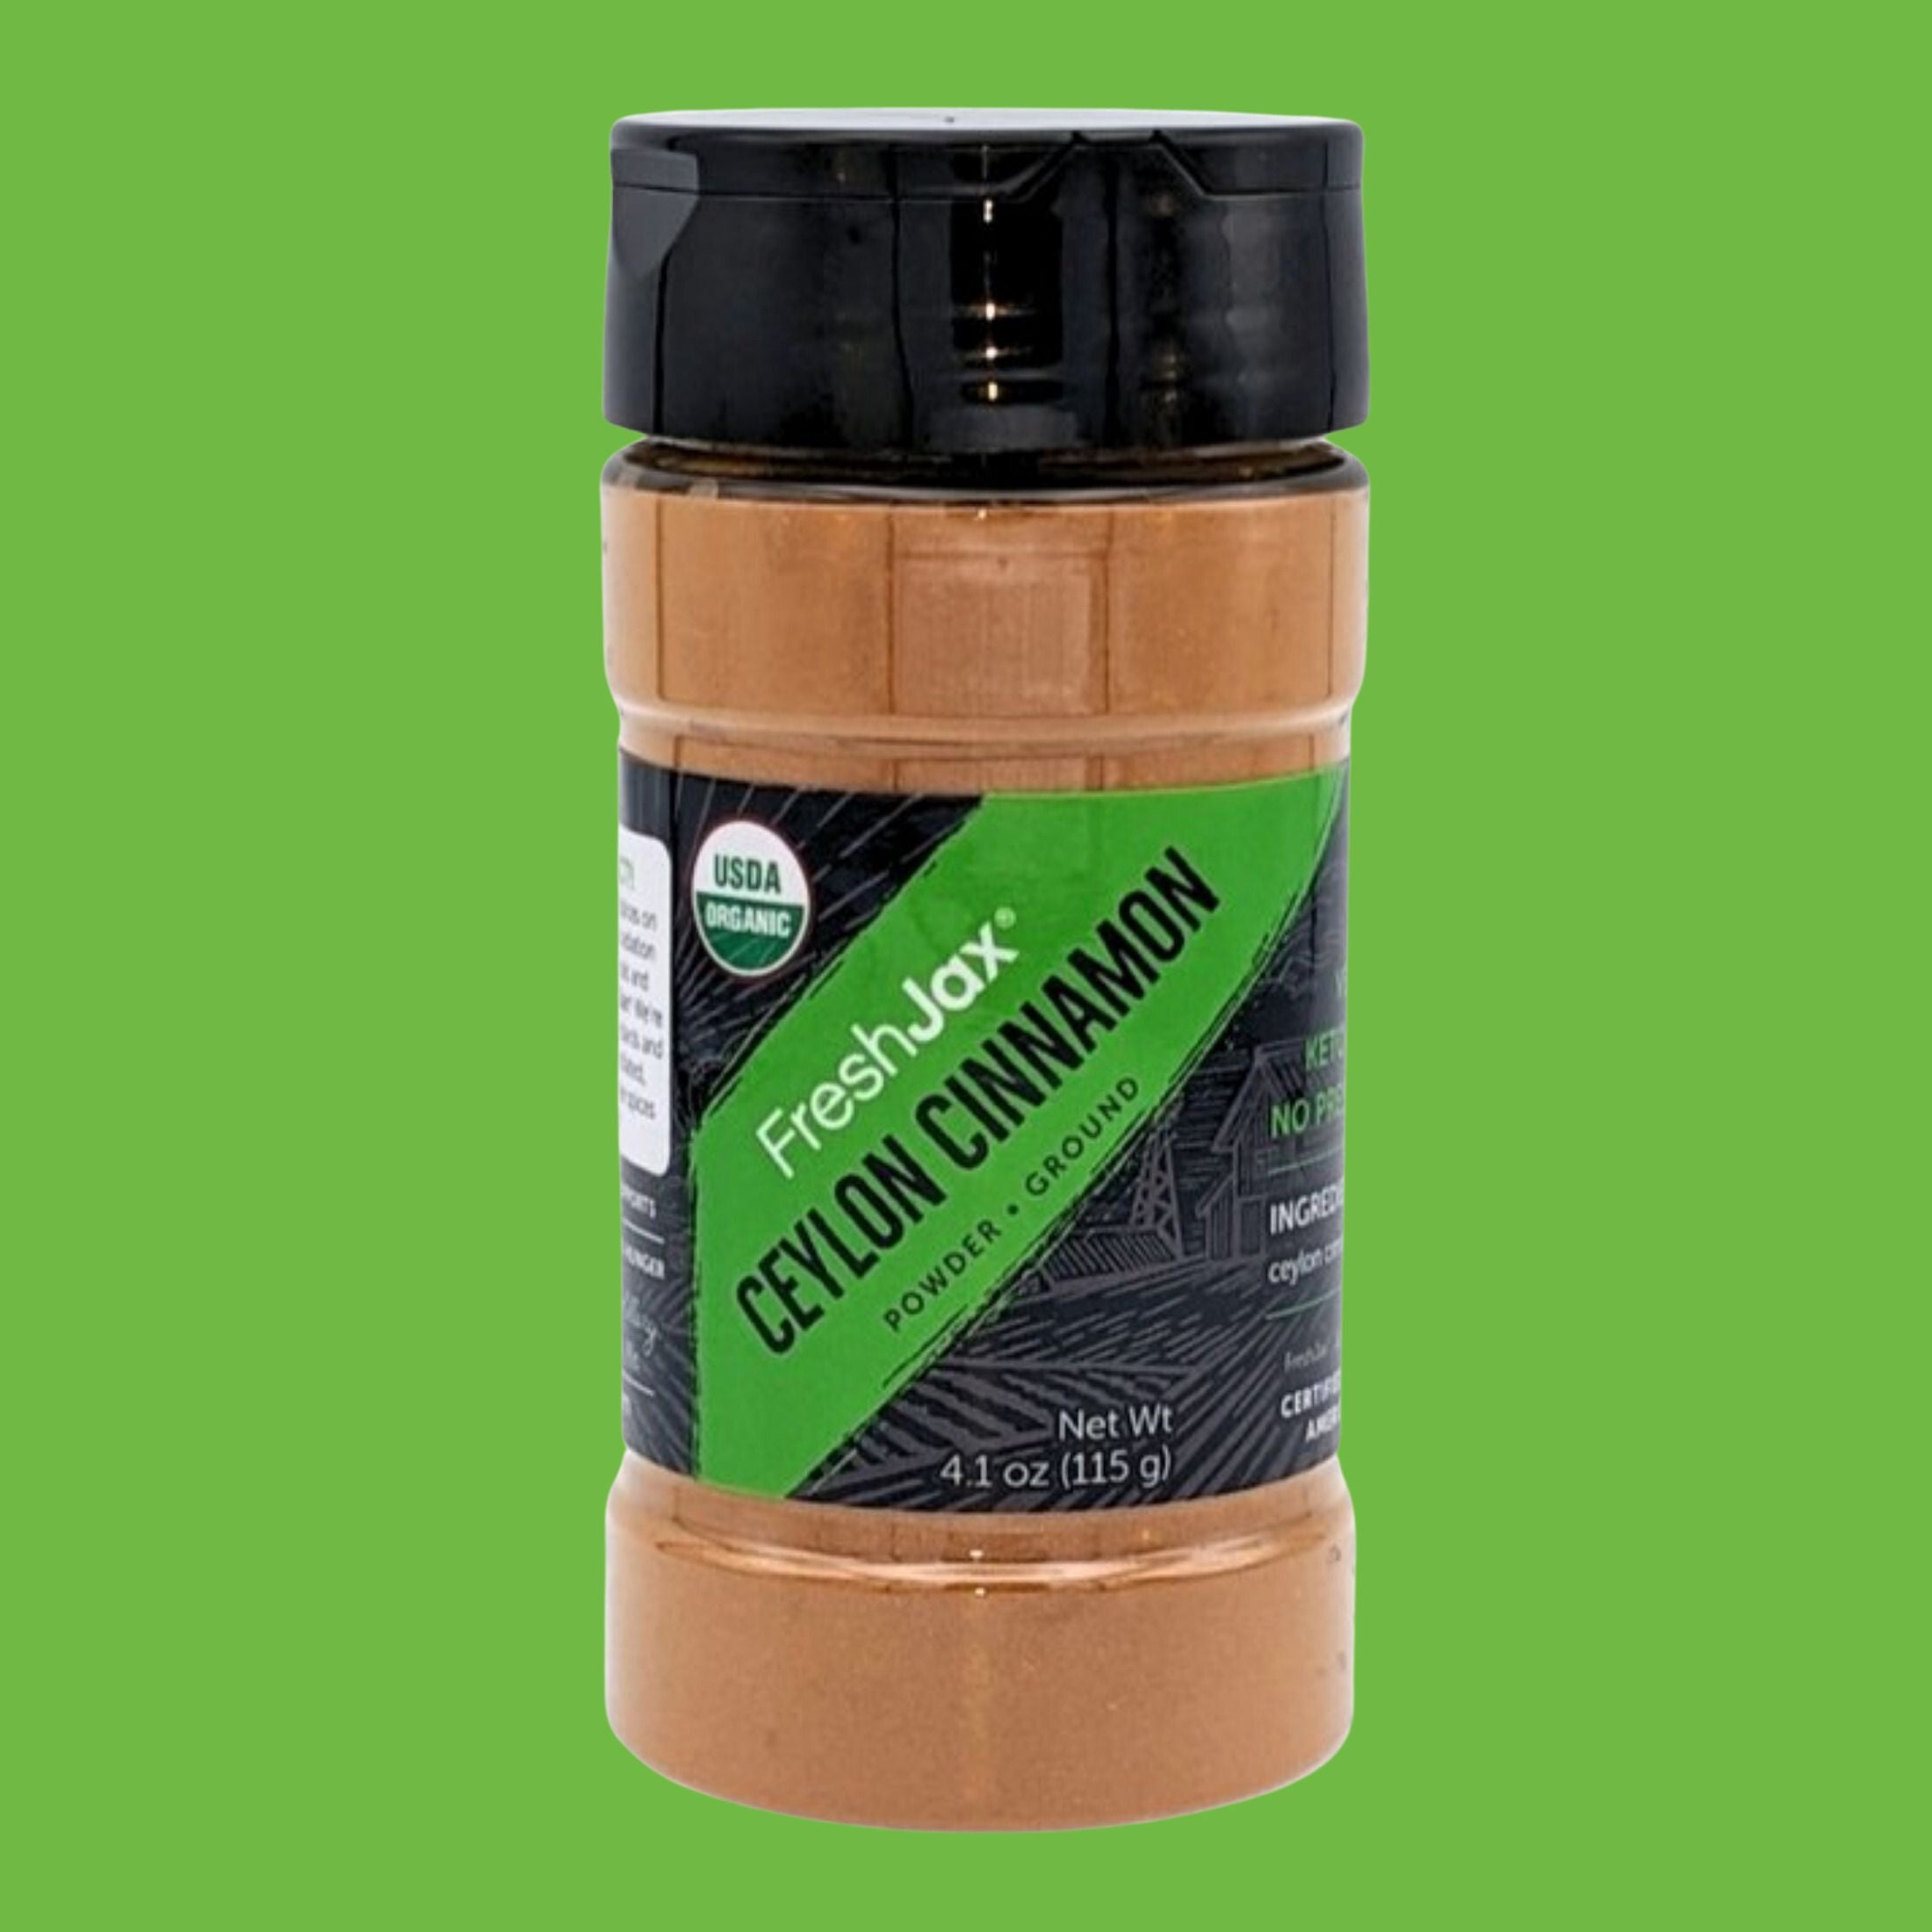 FreshJax Ceylon Cinnamon Ground Powder Large